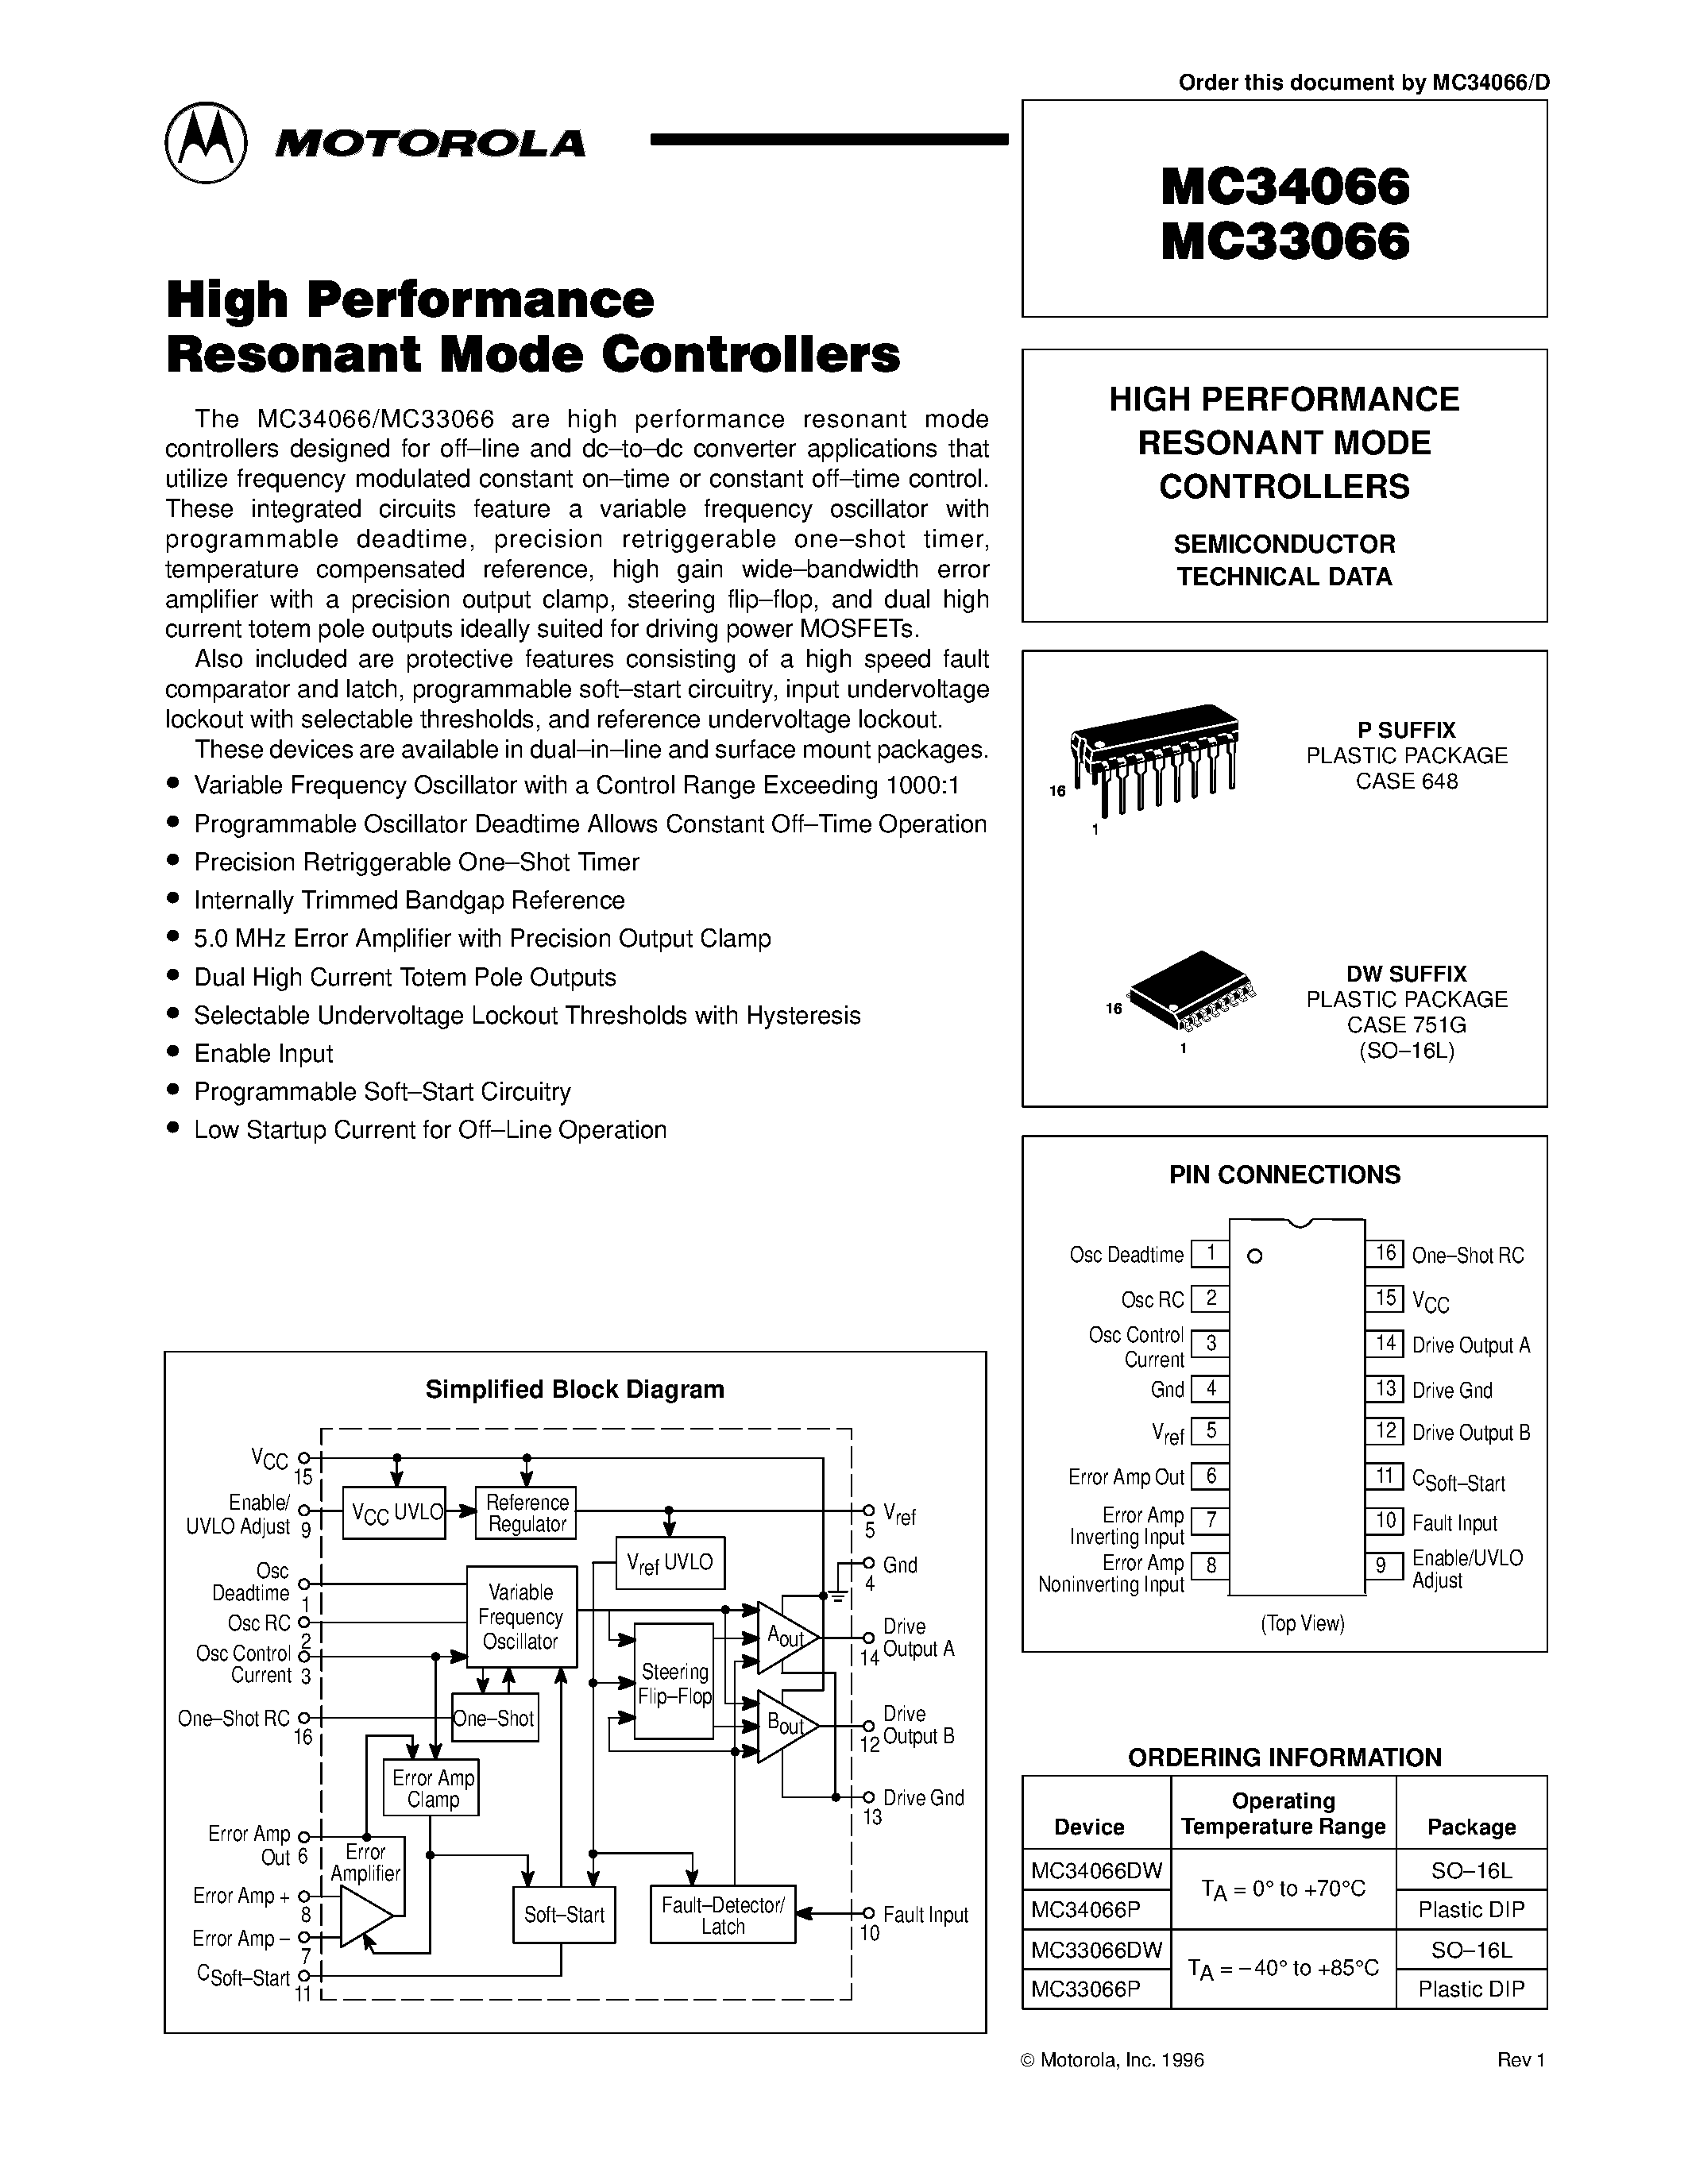 Datasheet MC33066 - (MC33066 / MC34066) HIGH PERFORMANCE RESONANT MODE CONTROLLERS page 1